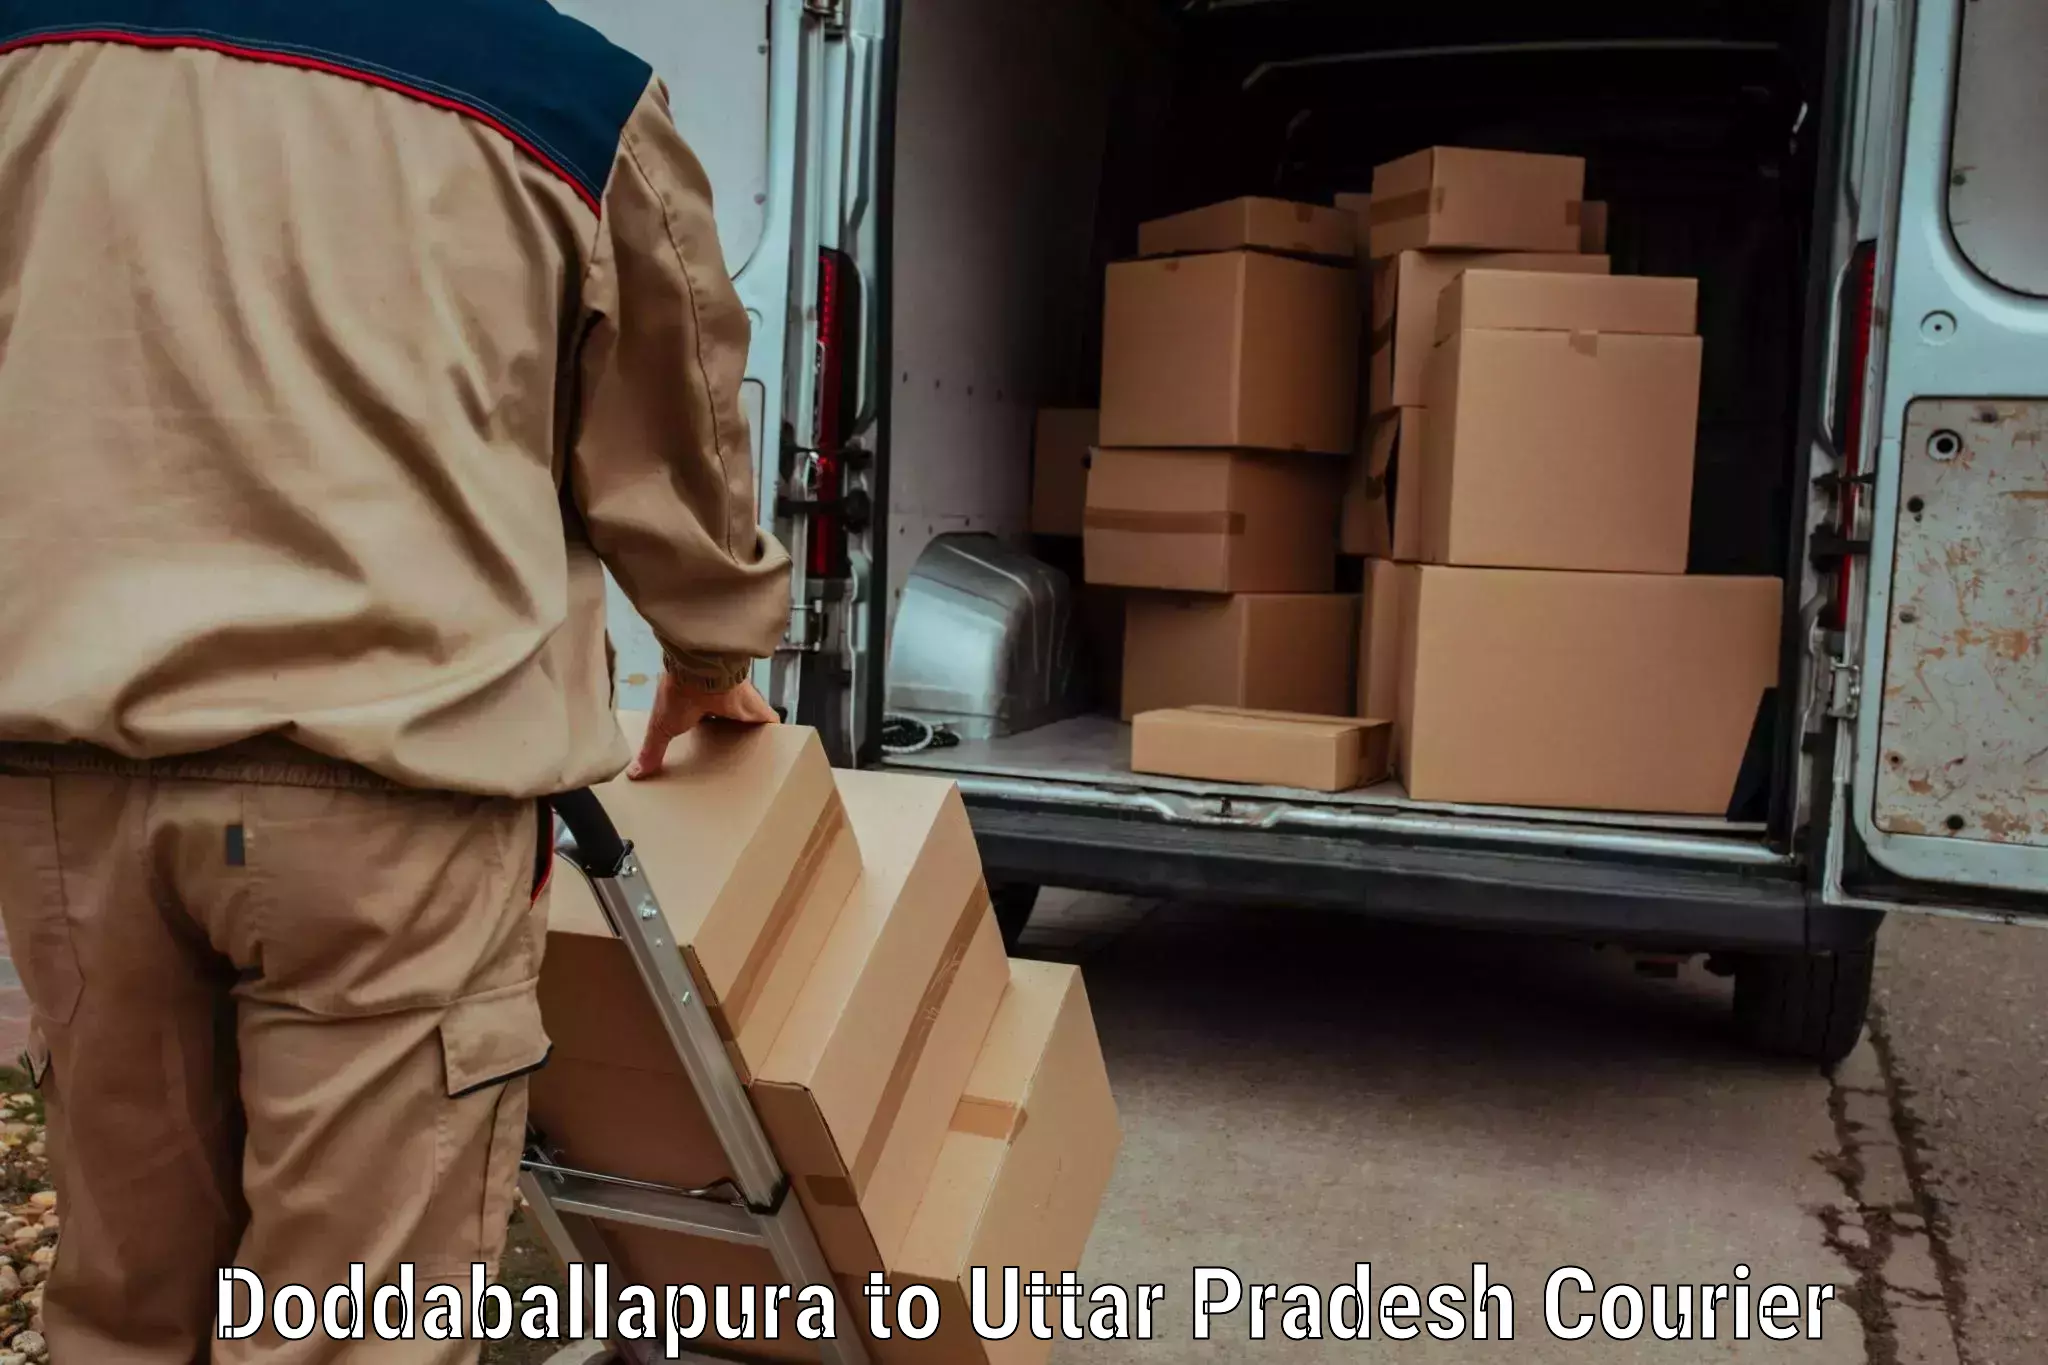 Easy access courier services Doddaballapura to Budhana